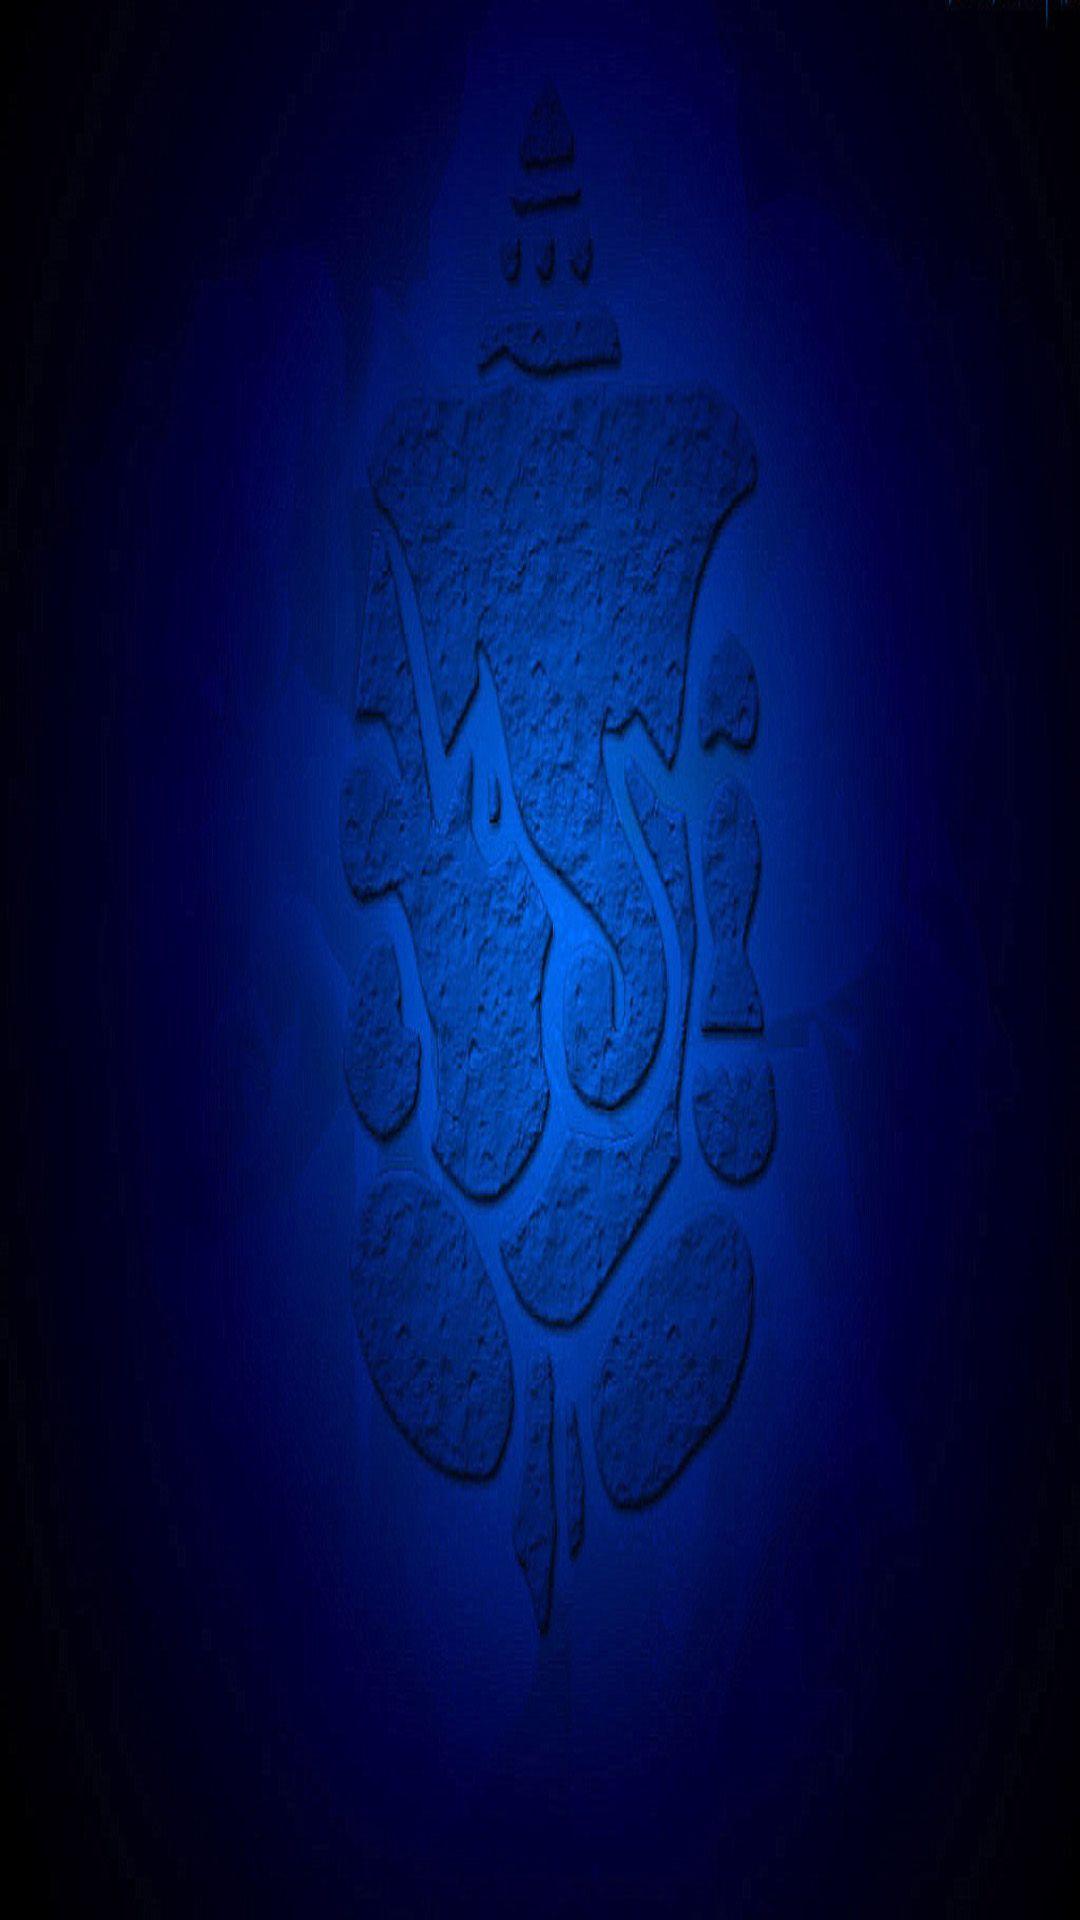 God ganeshji with blue background iphone hq wallpaper. iPhone